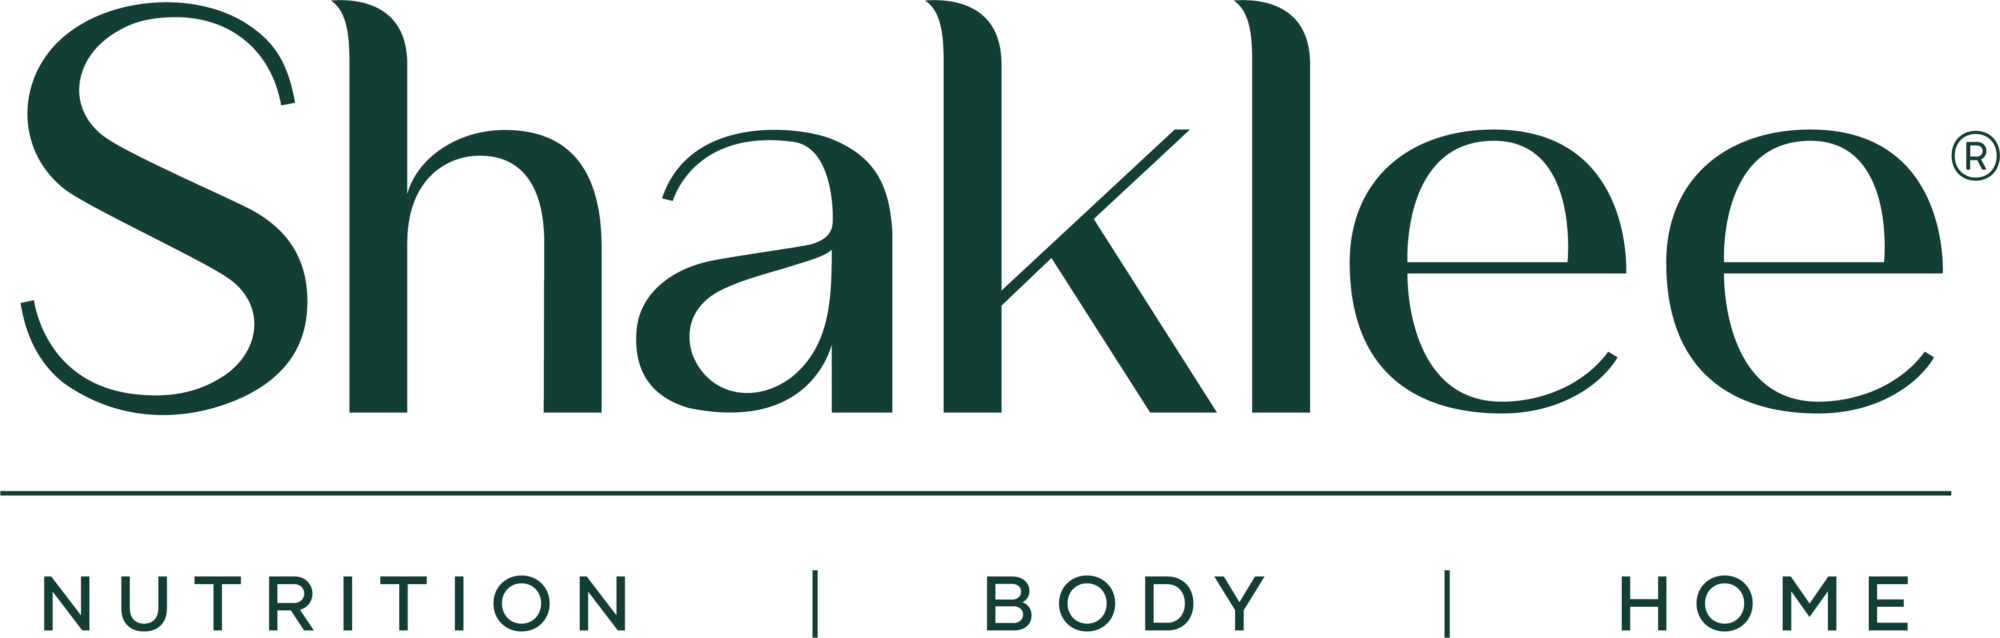 final shaklee logo rectangle en us